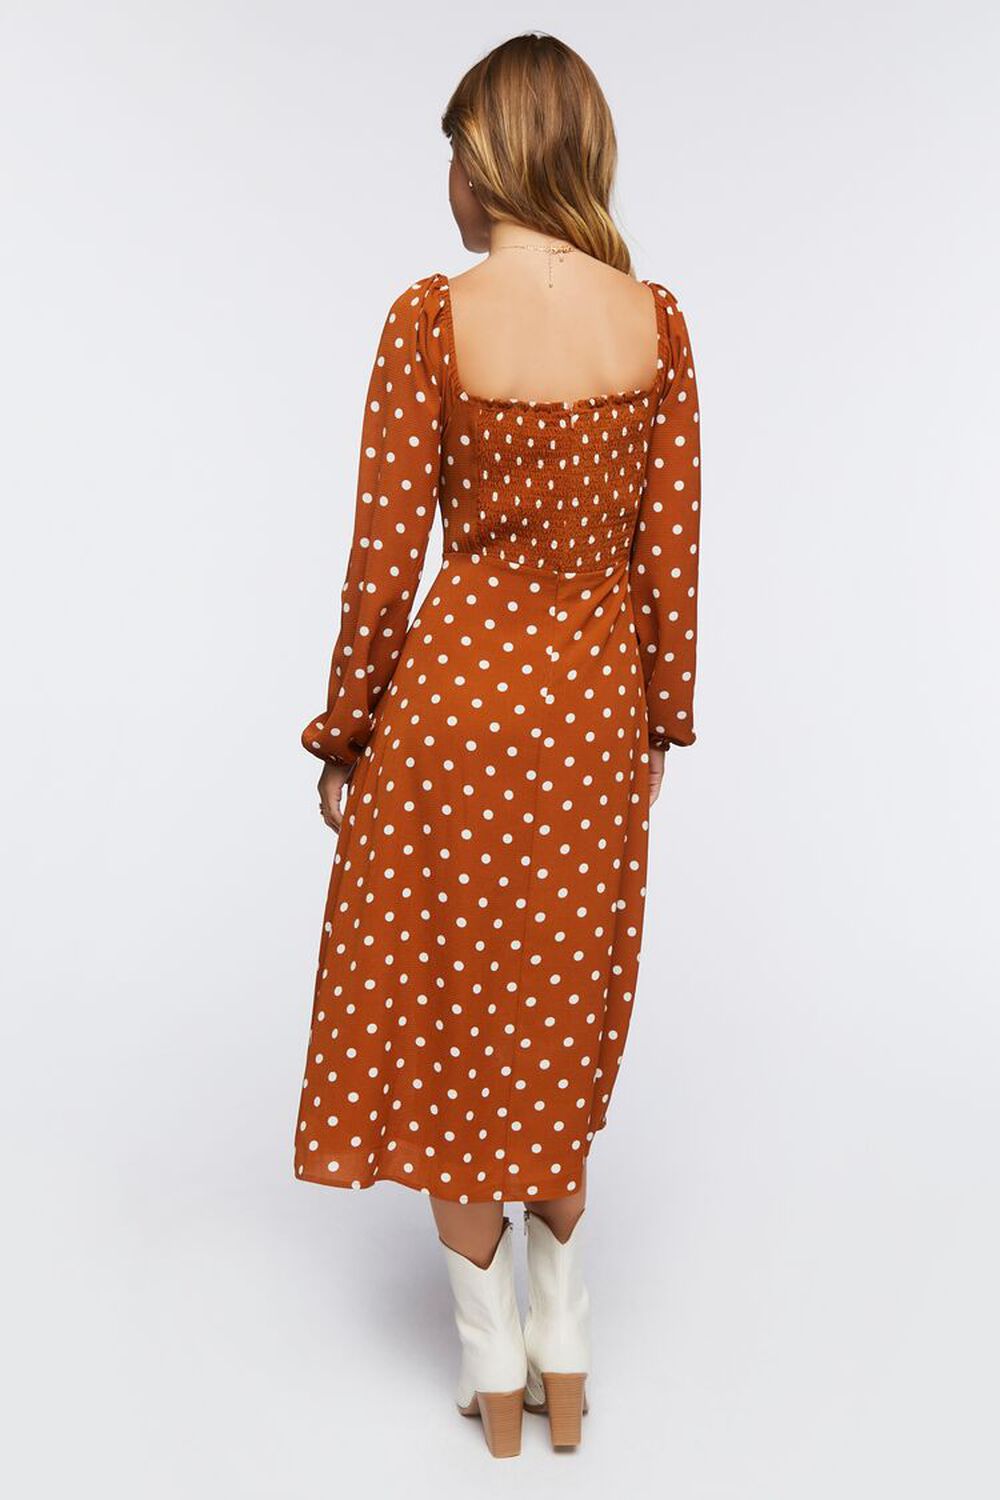 TAN/WHITE Polka Dot Peasant-Sleeve Midi Dress, image 3